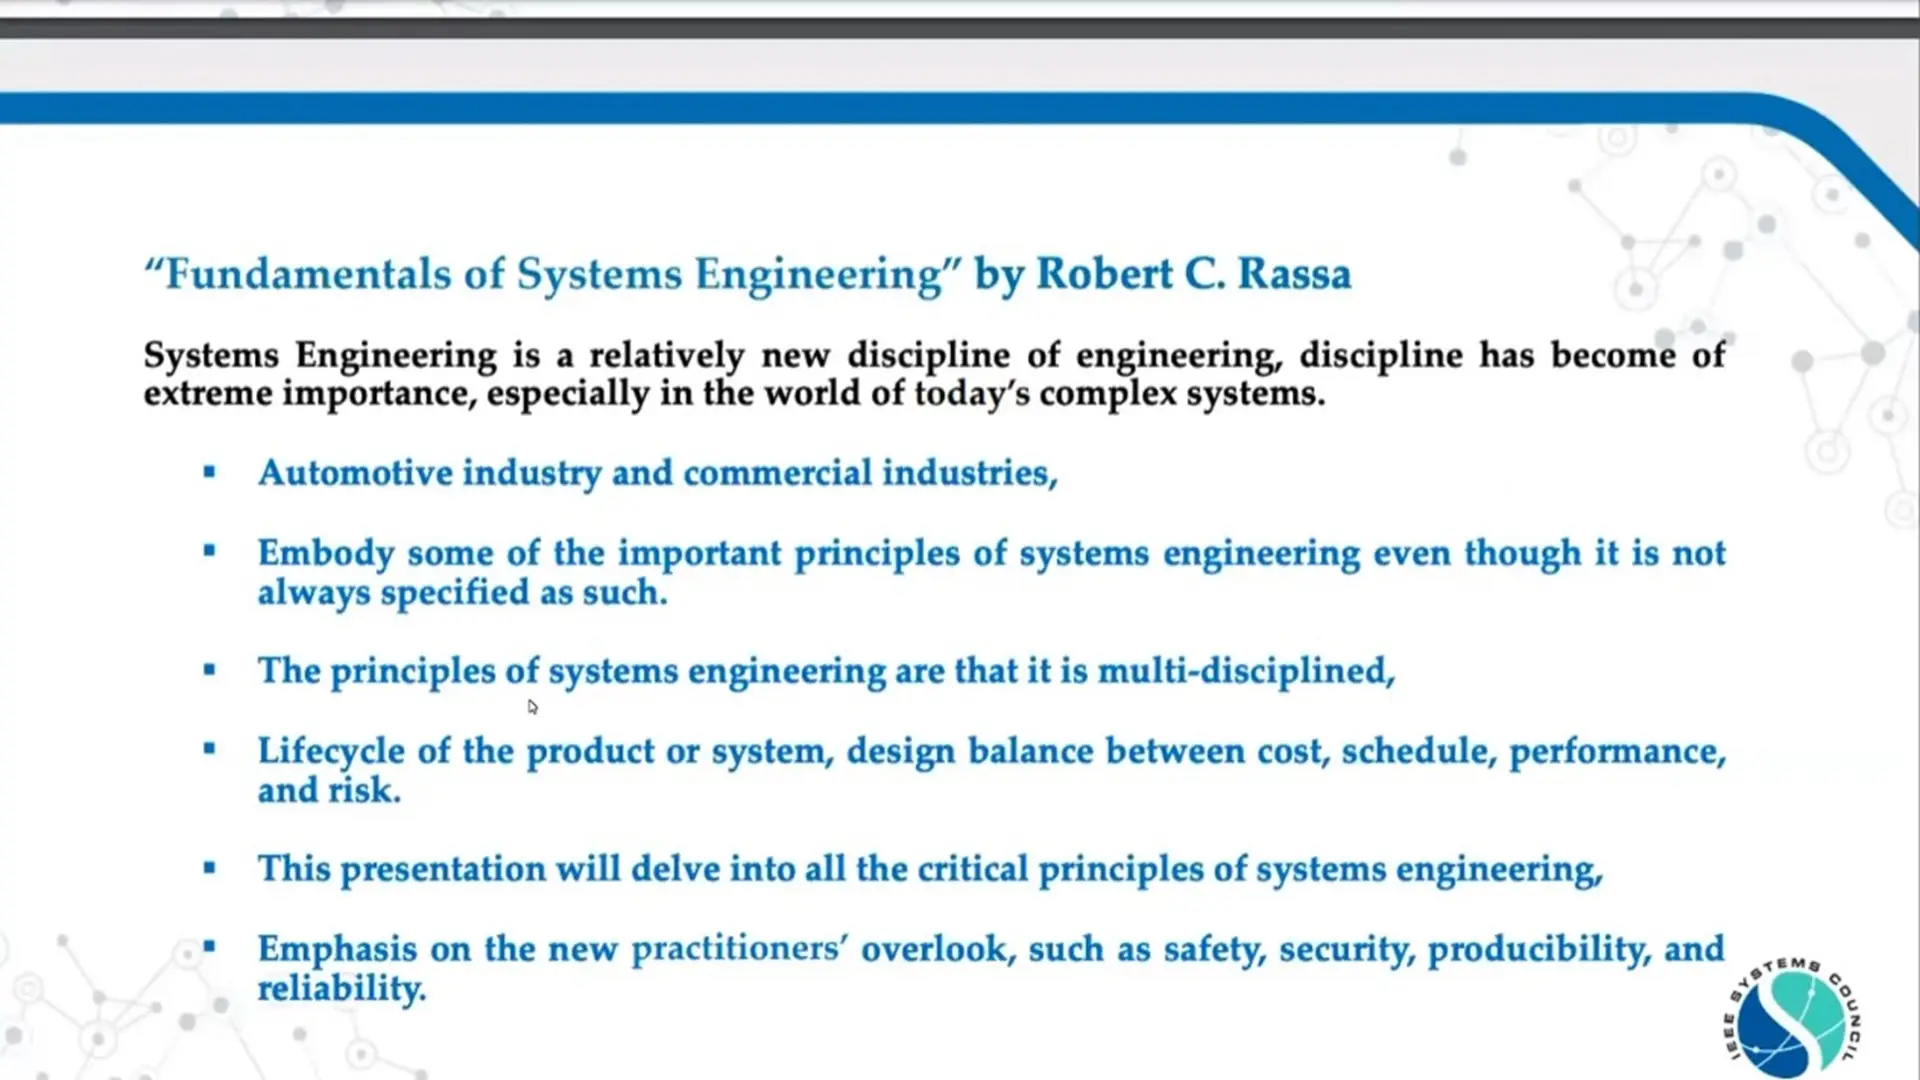 Fundamentals of Systems Engineering by Robert Rassa